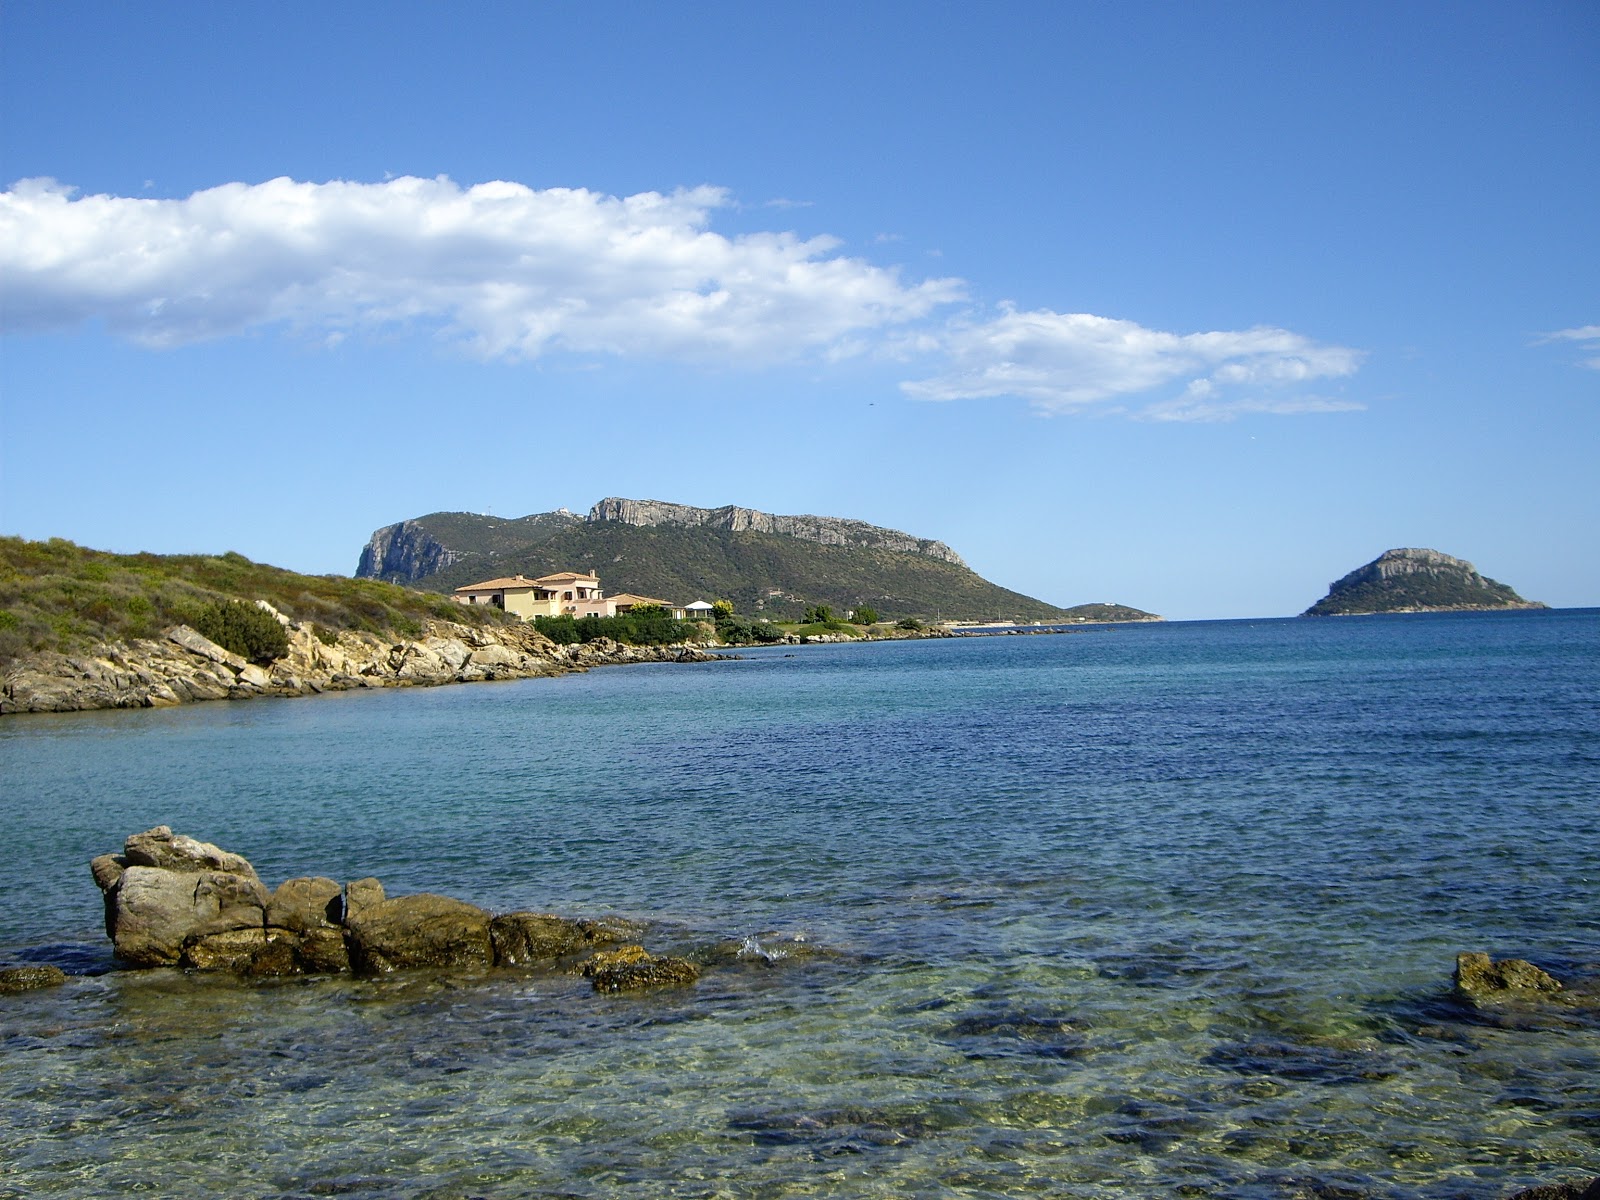 Foto av Spiaggia S'abba e sa Pedra med medium nivå av renlighet